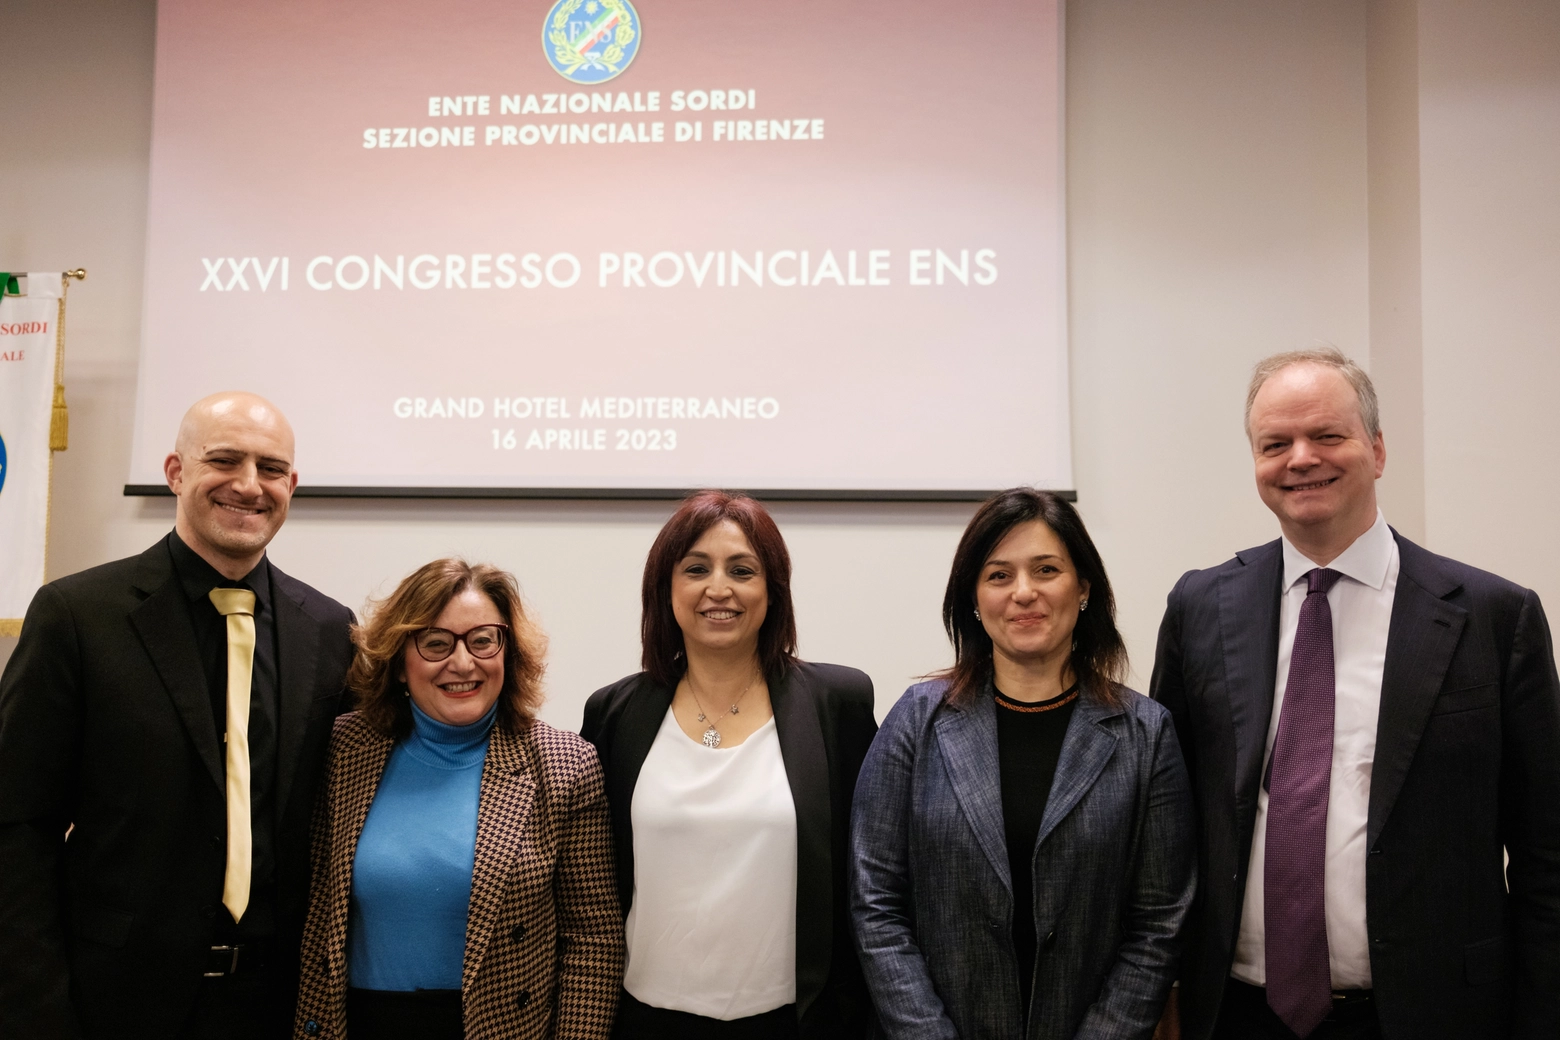 Congresso Provinciale Ens di Firenze